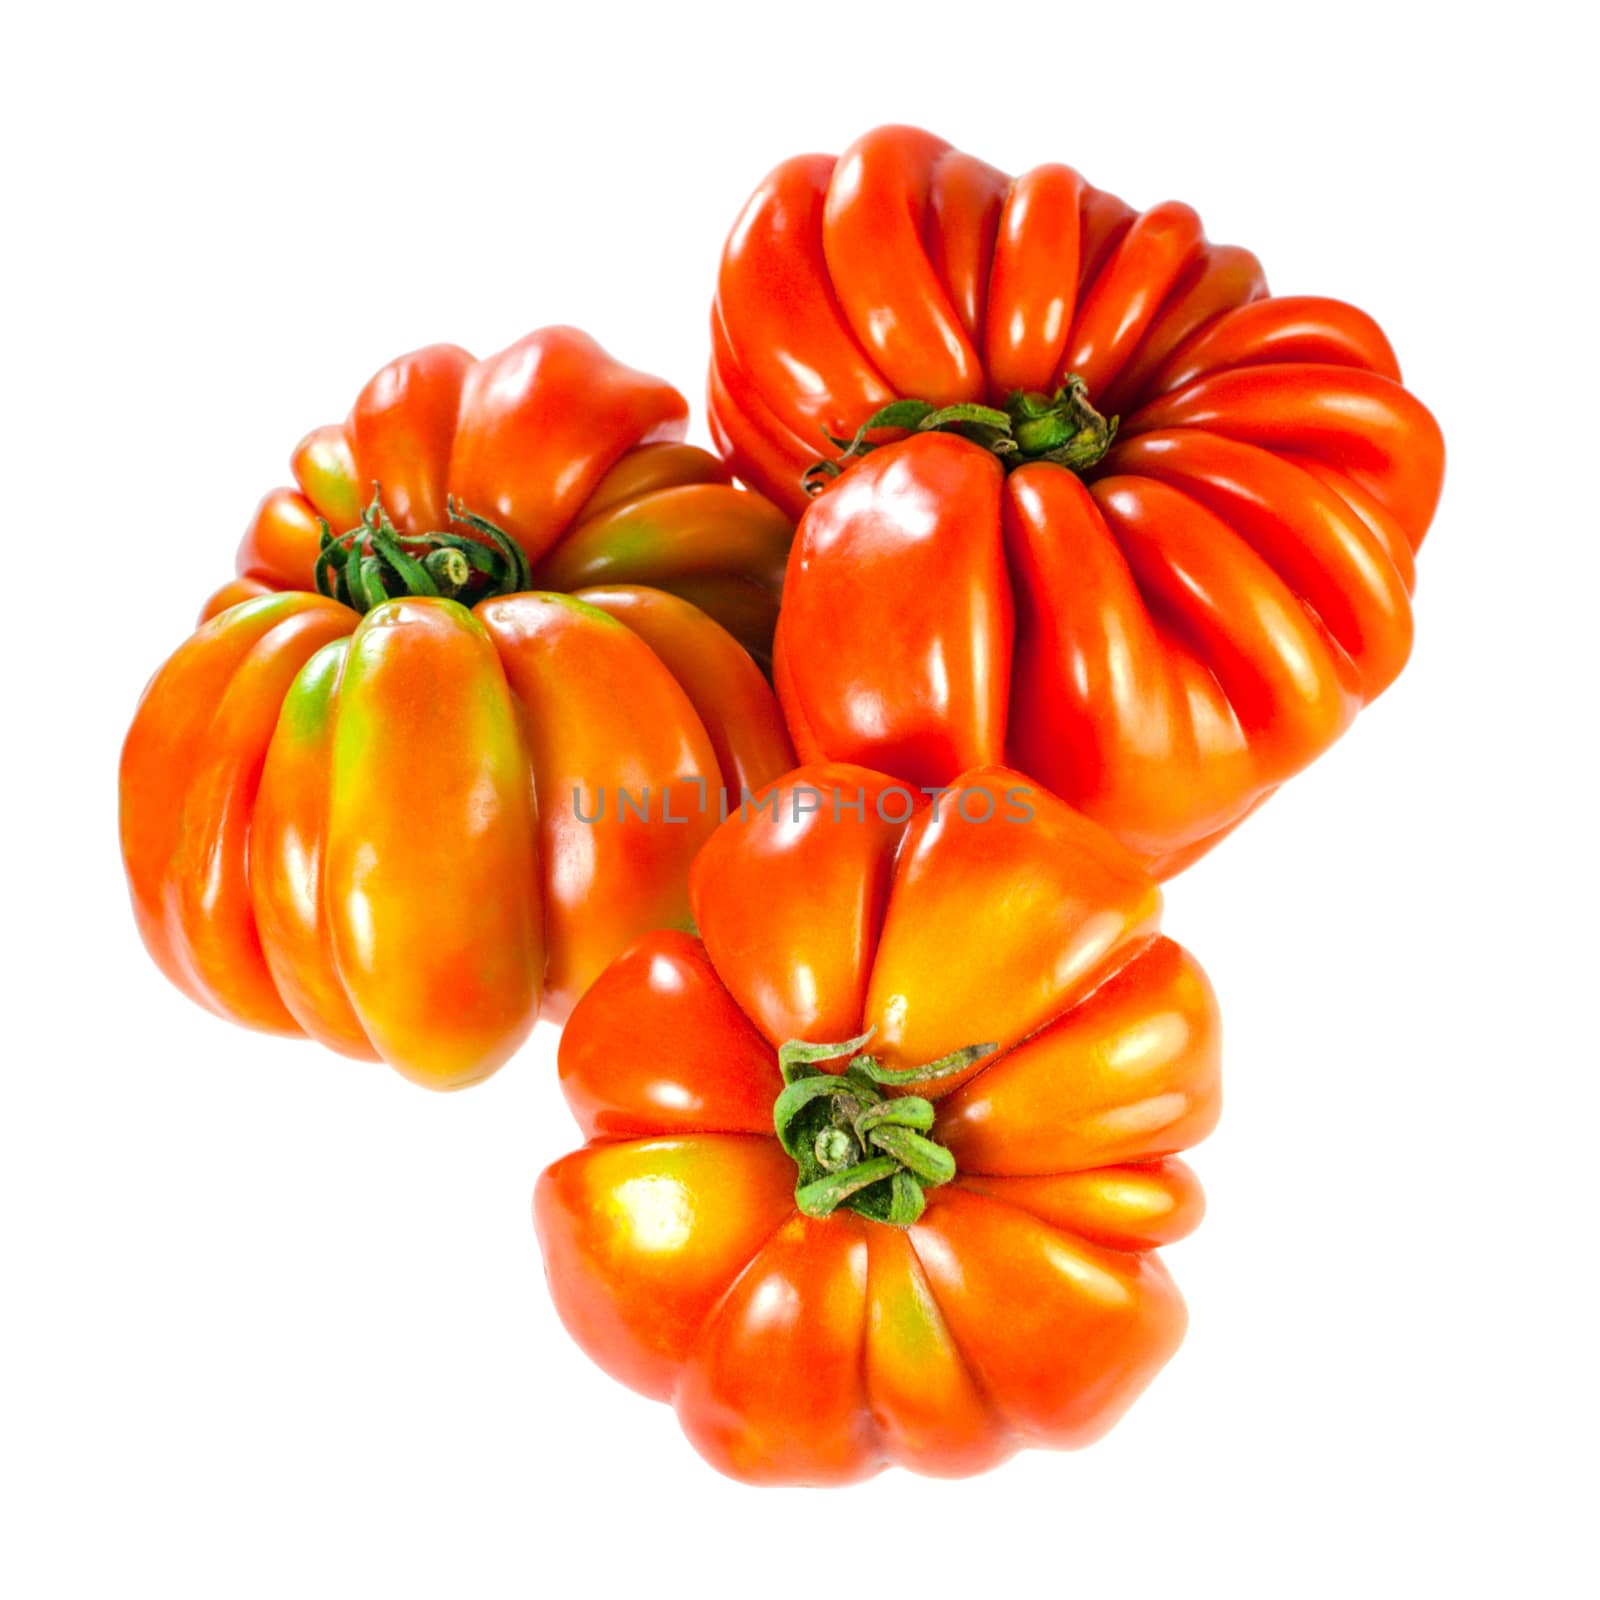 costoluto genovese tomato, isolated on white background by uvisni